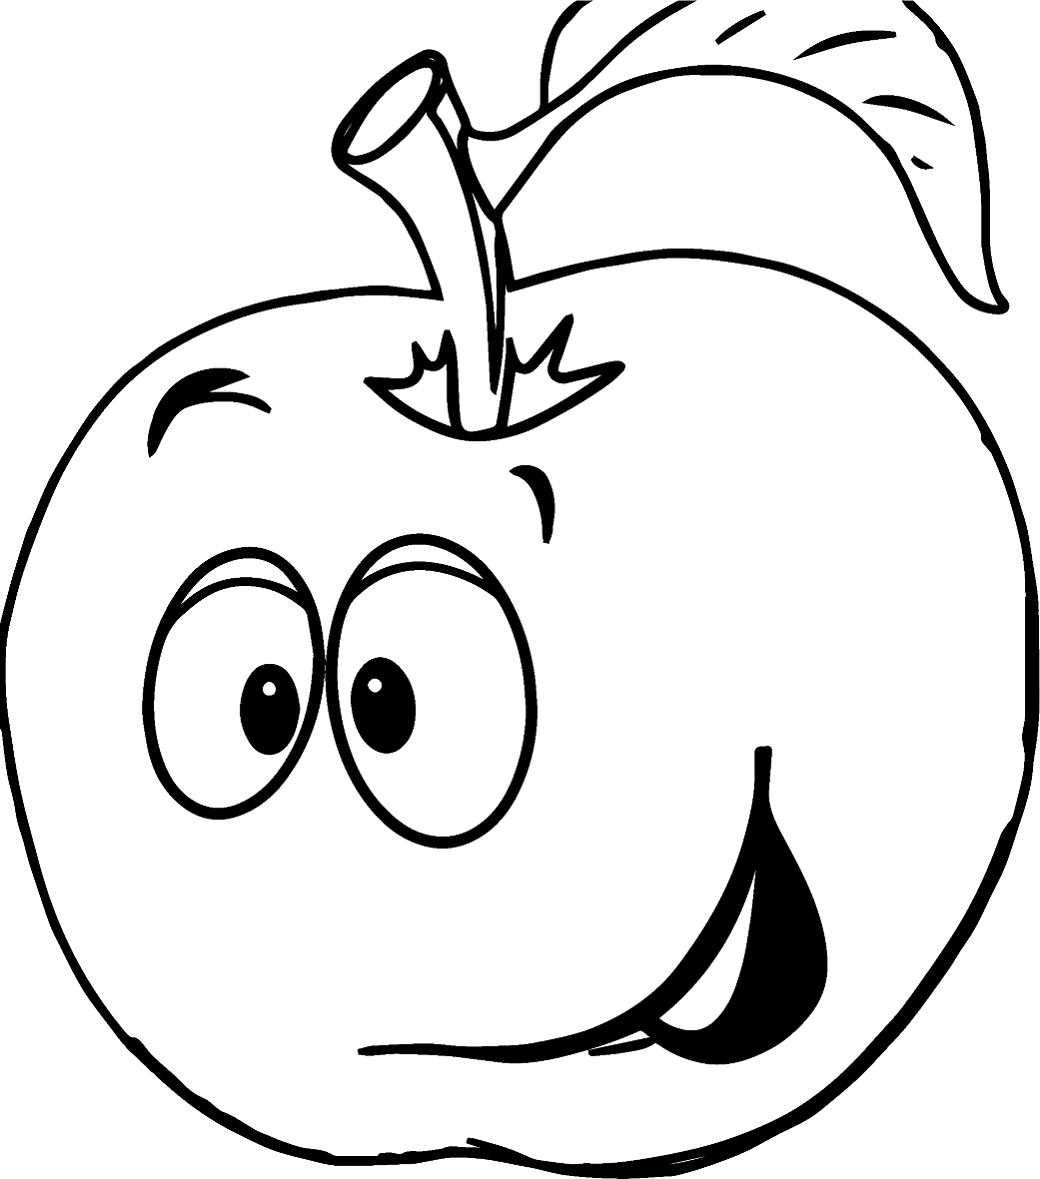 Frucht-Karikatur-Apfel-Malseite